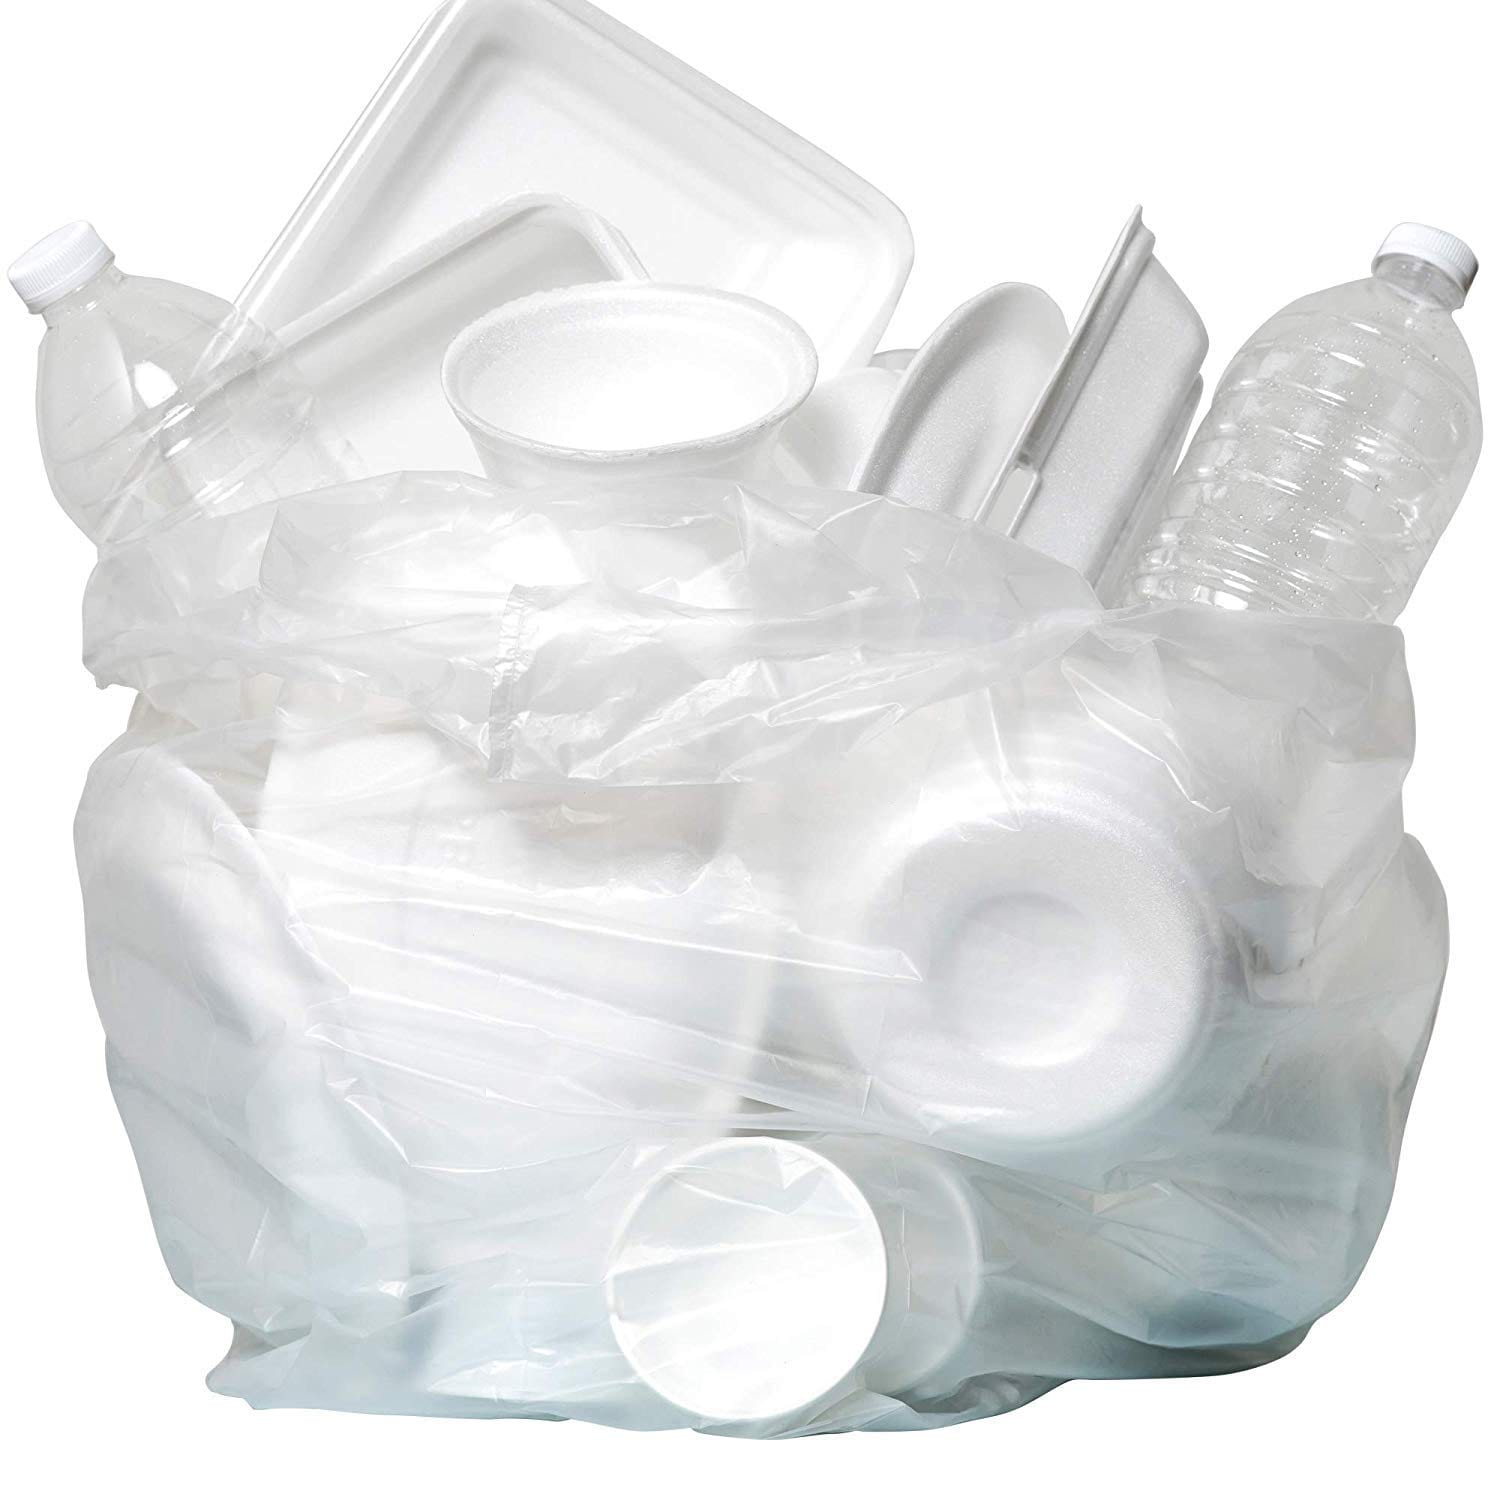 Aluf Plastics 16 Gal. 0.5 Mil White Trash Bags 24 in. x 31 in